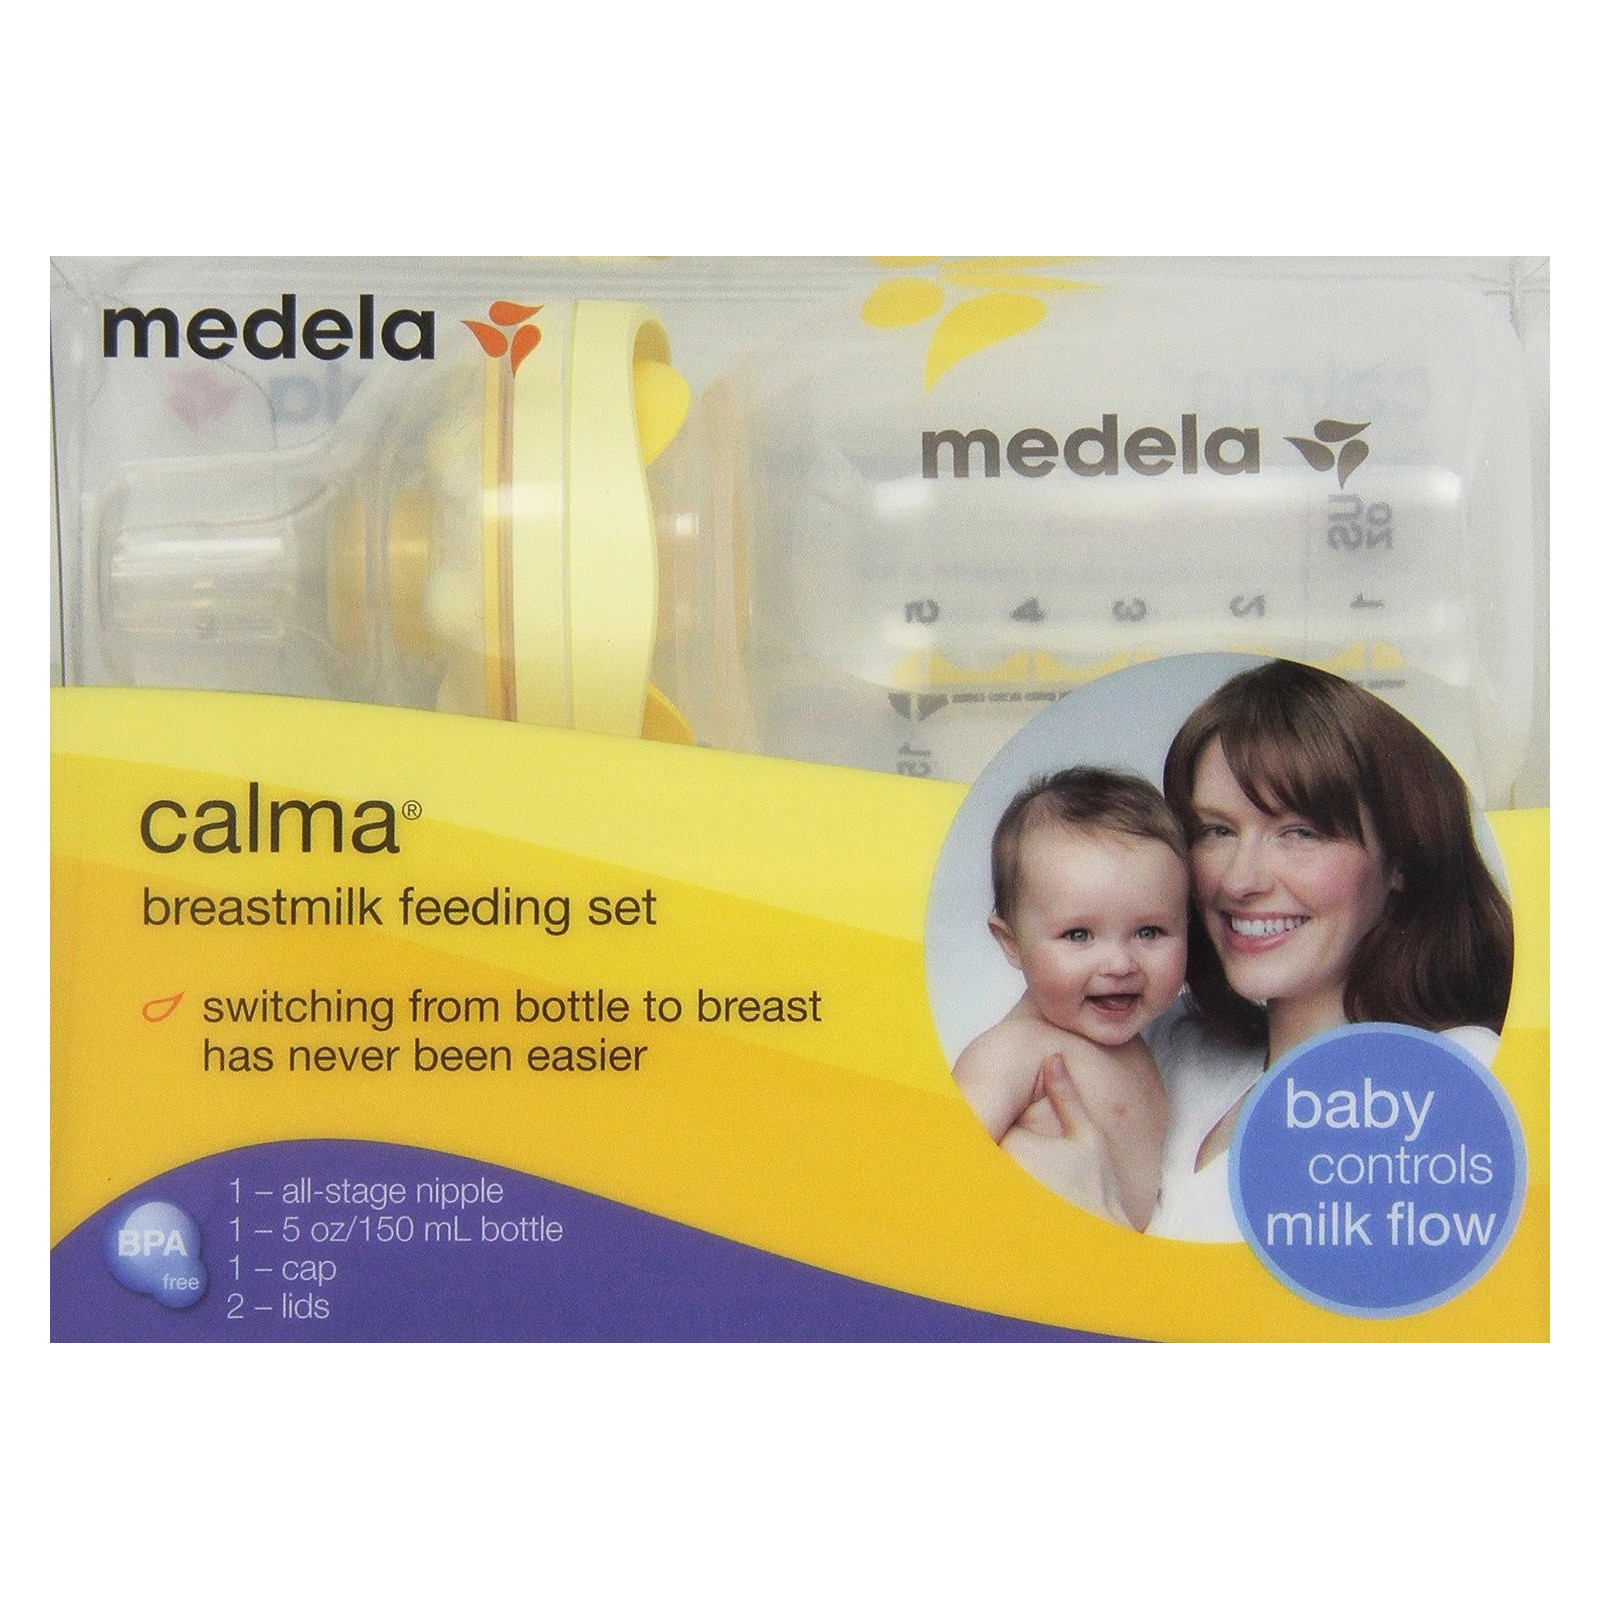 Medela Calma Breastmilk Feeding Set with 5 oz Bottle 